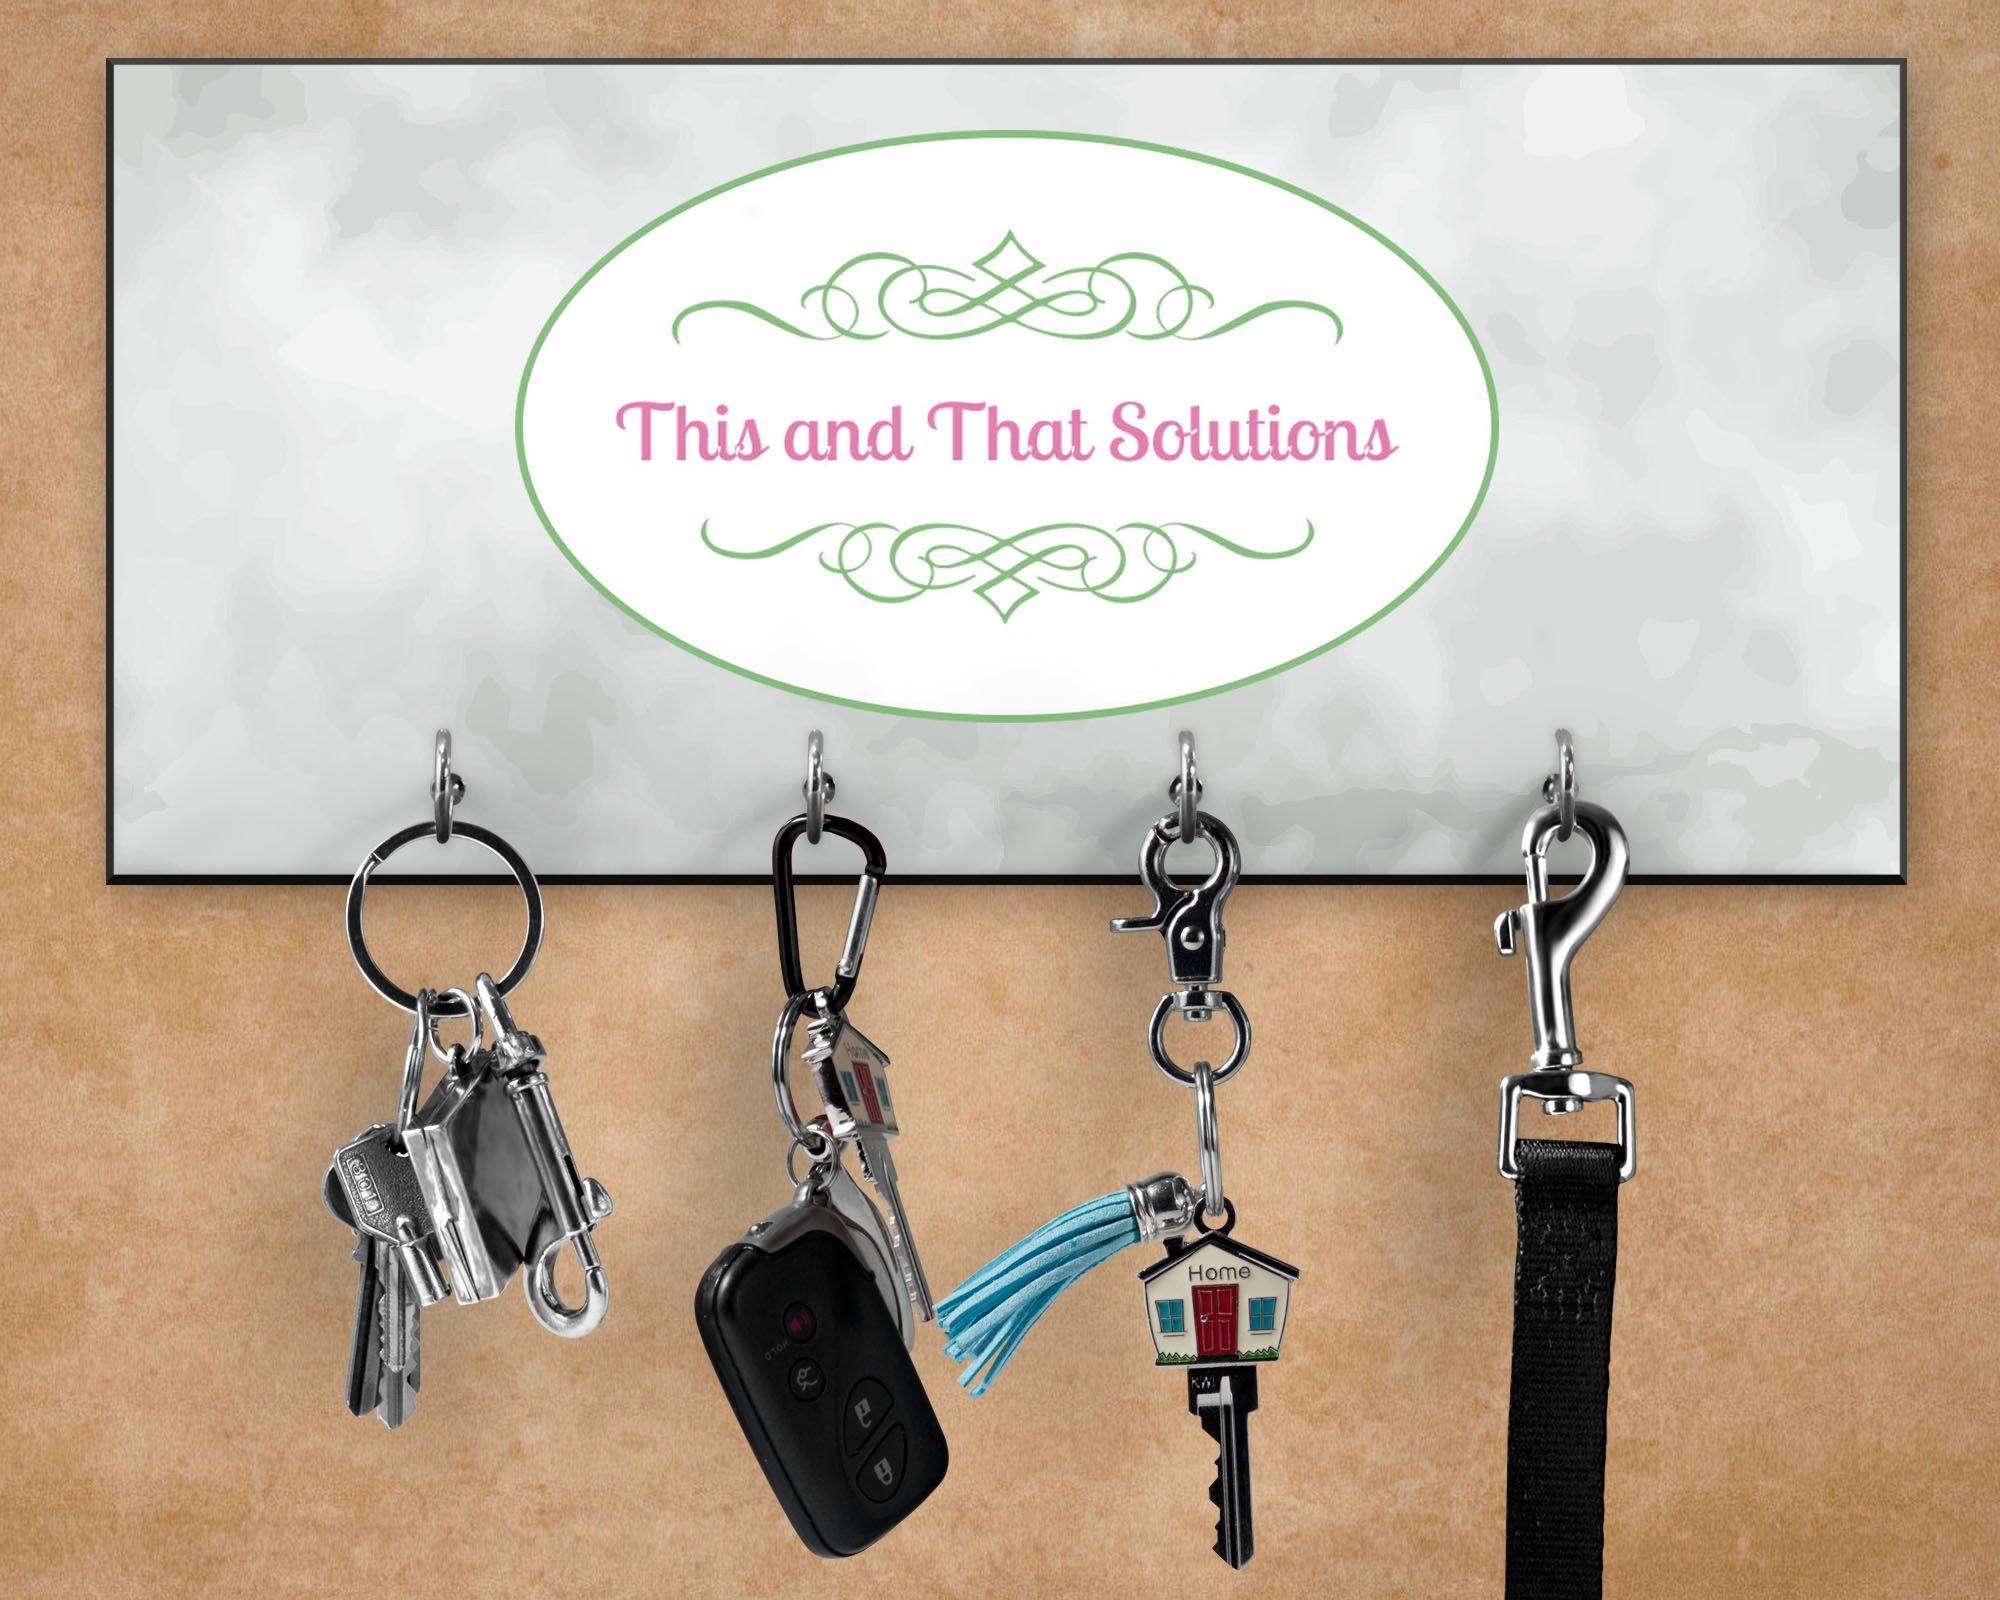 Personalized Key Hanger | Custom Key Rack| Company Logo - This & That Solutions - Personalized Key Hanger | Custom Key Rack| Company Logo - Personalized Gifts & Custom Home Decor